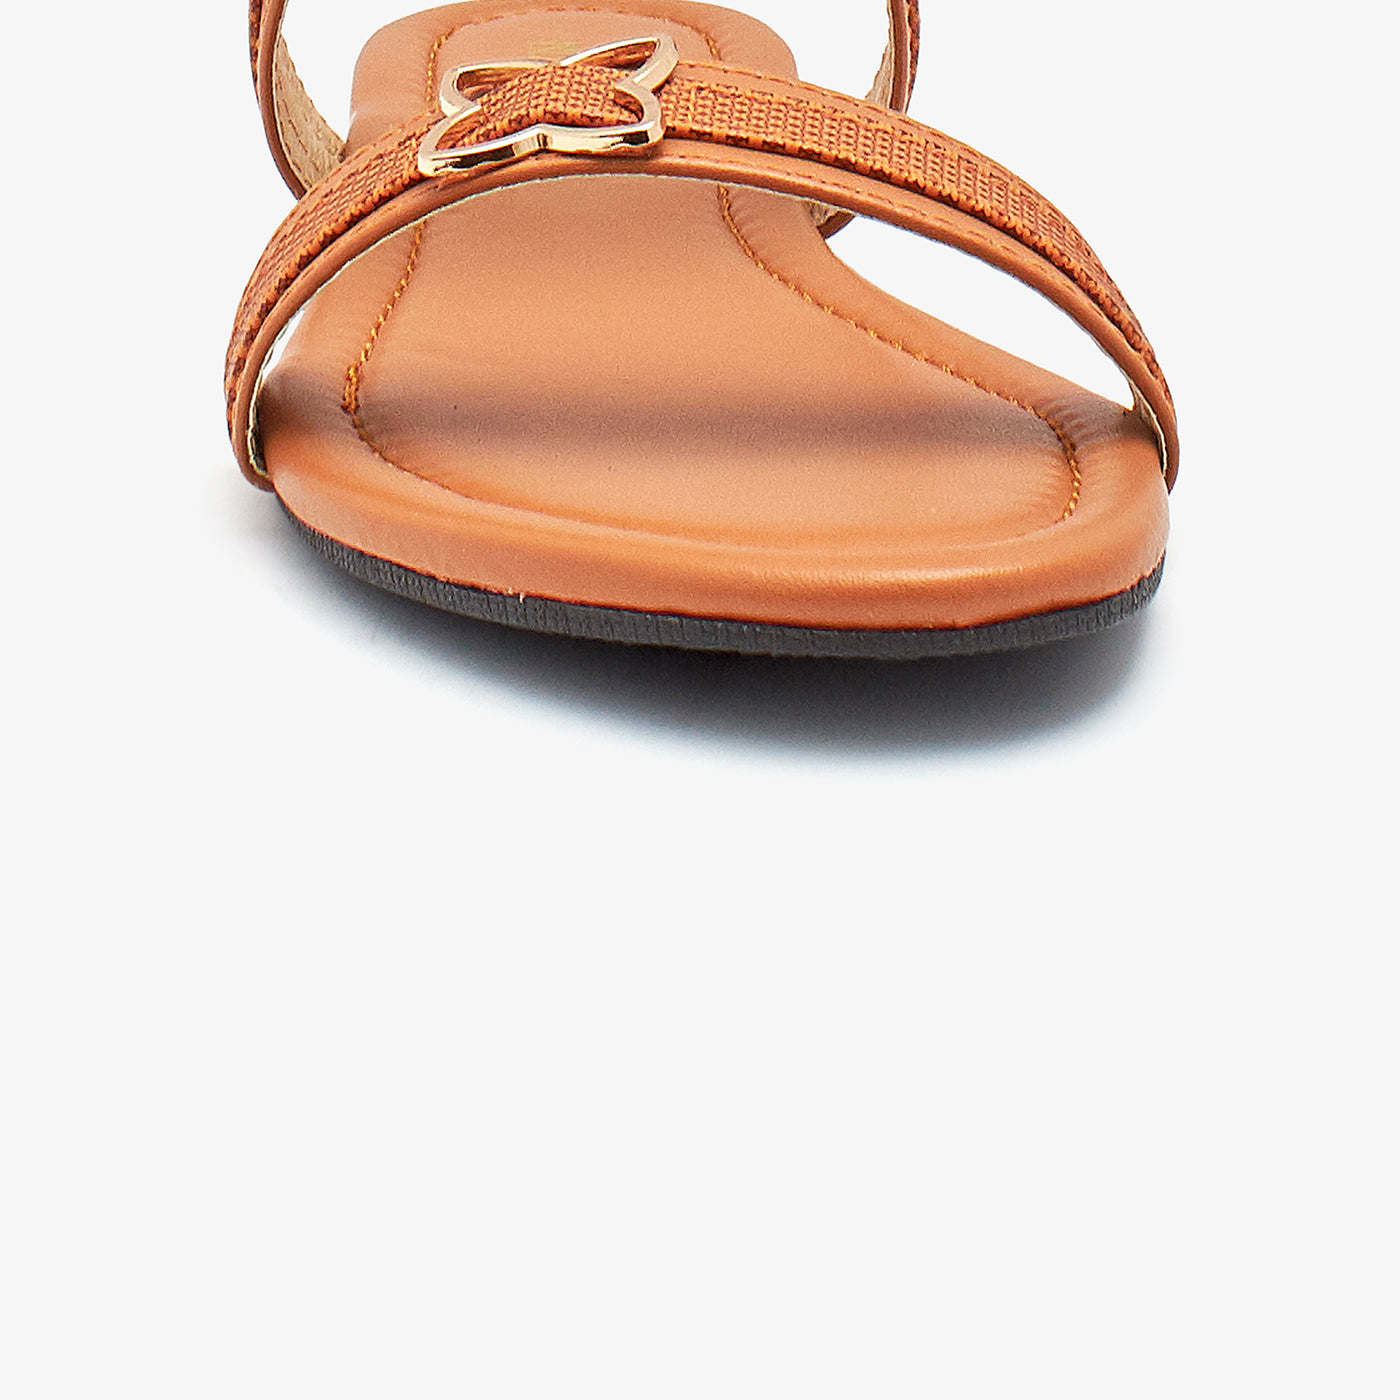 Double Strap Metallic Brooch  Ladies Sandal